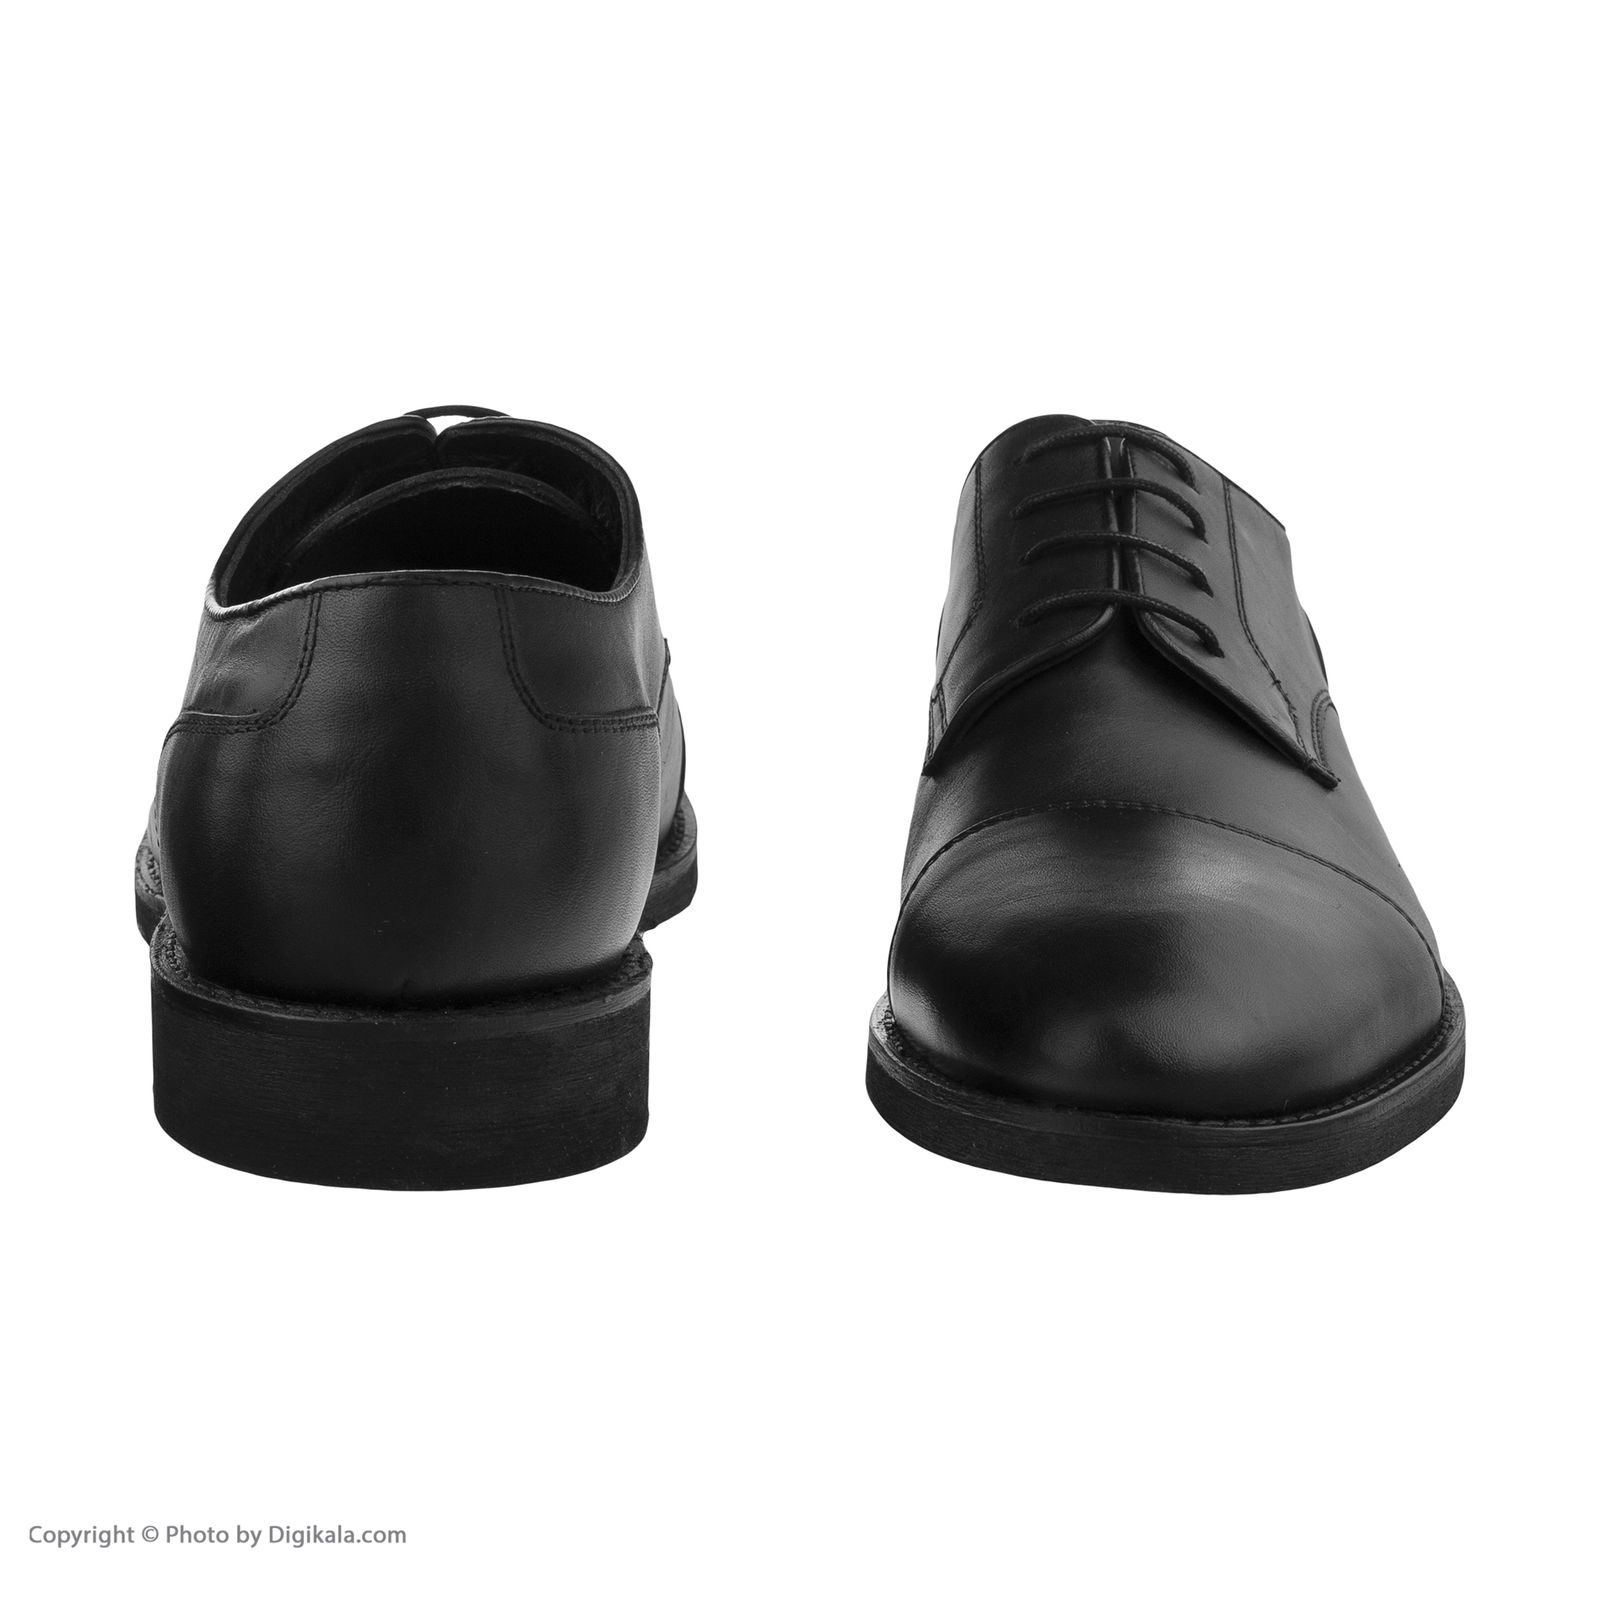  کفش مردانه شیفر مدل 7253E503101 -  - 3